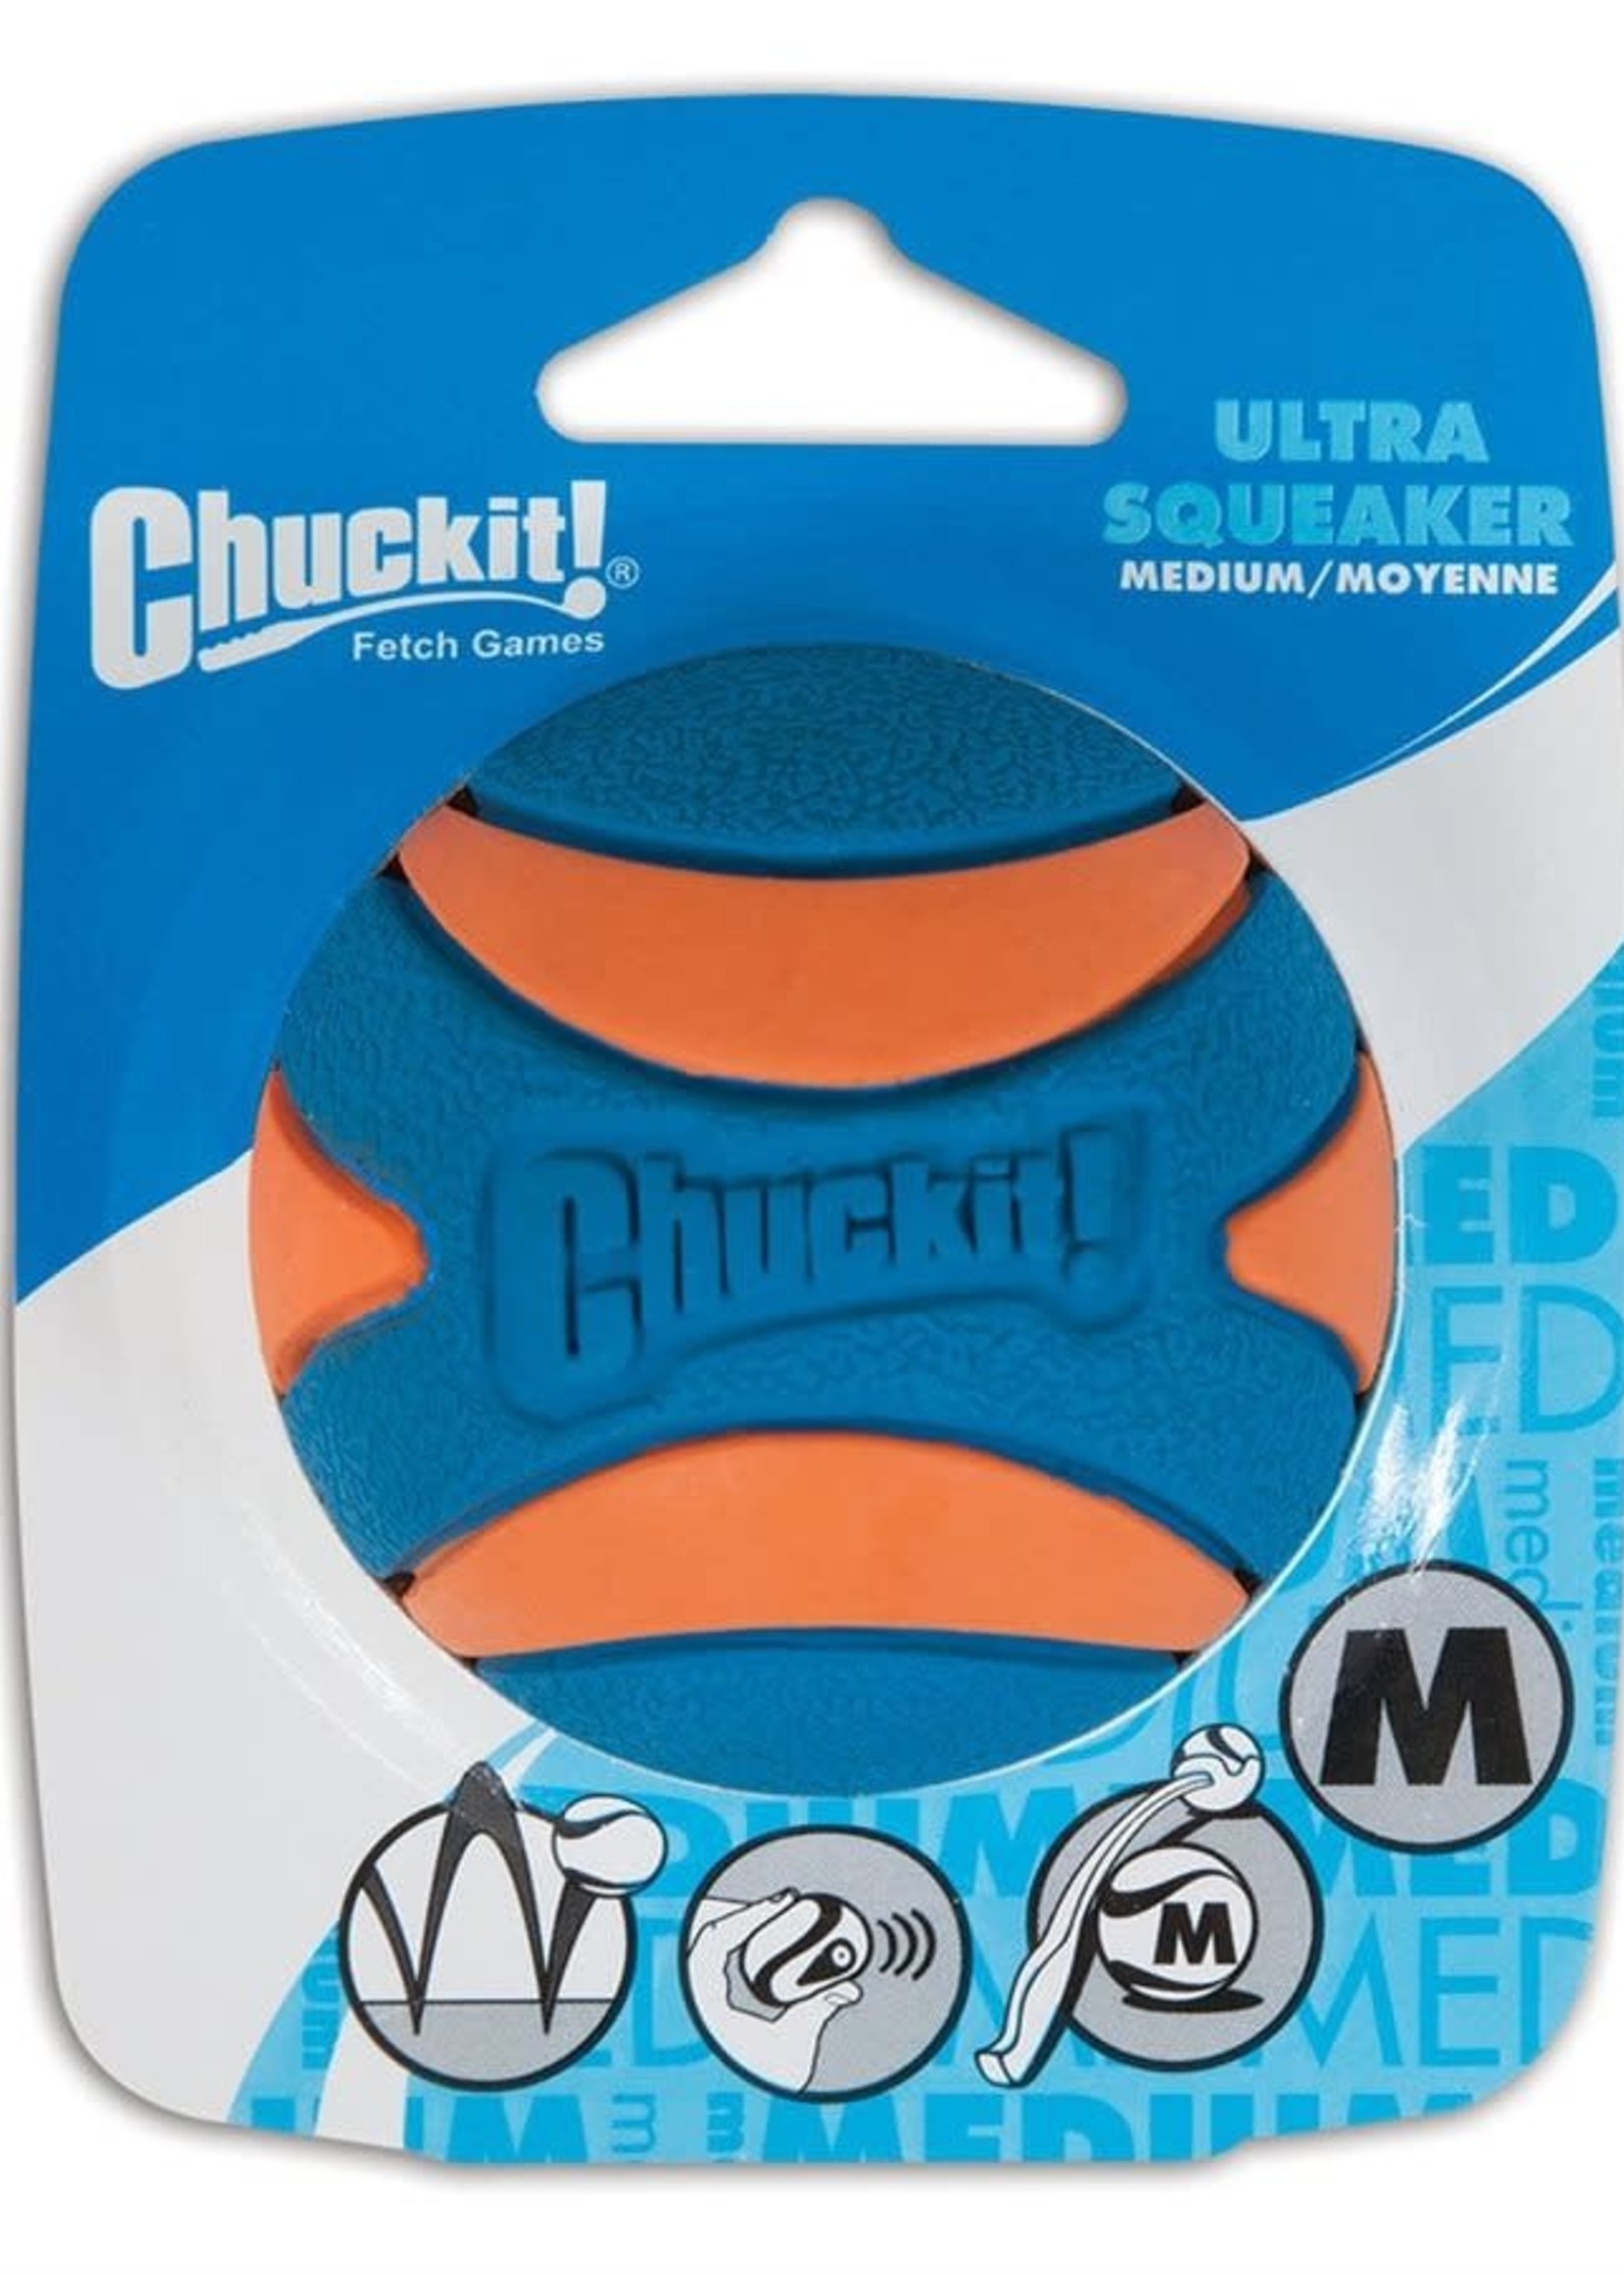 Chuckit!® Ultra Squeaker Ball Medium